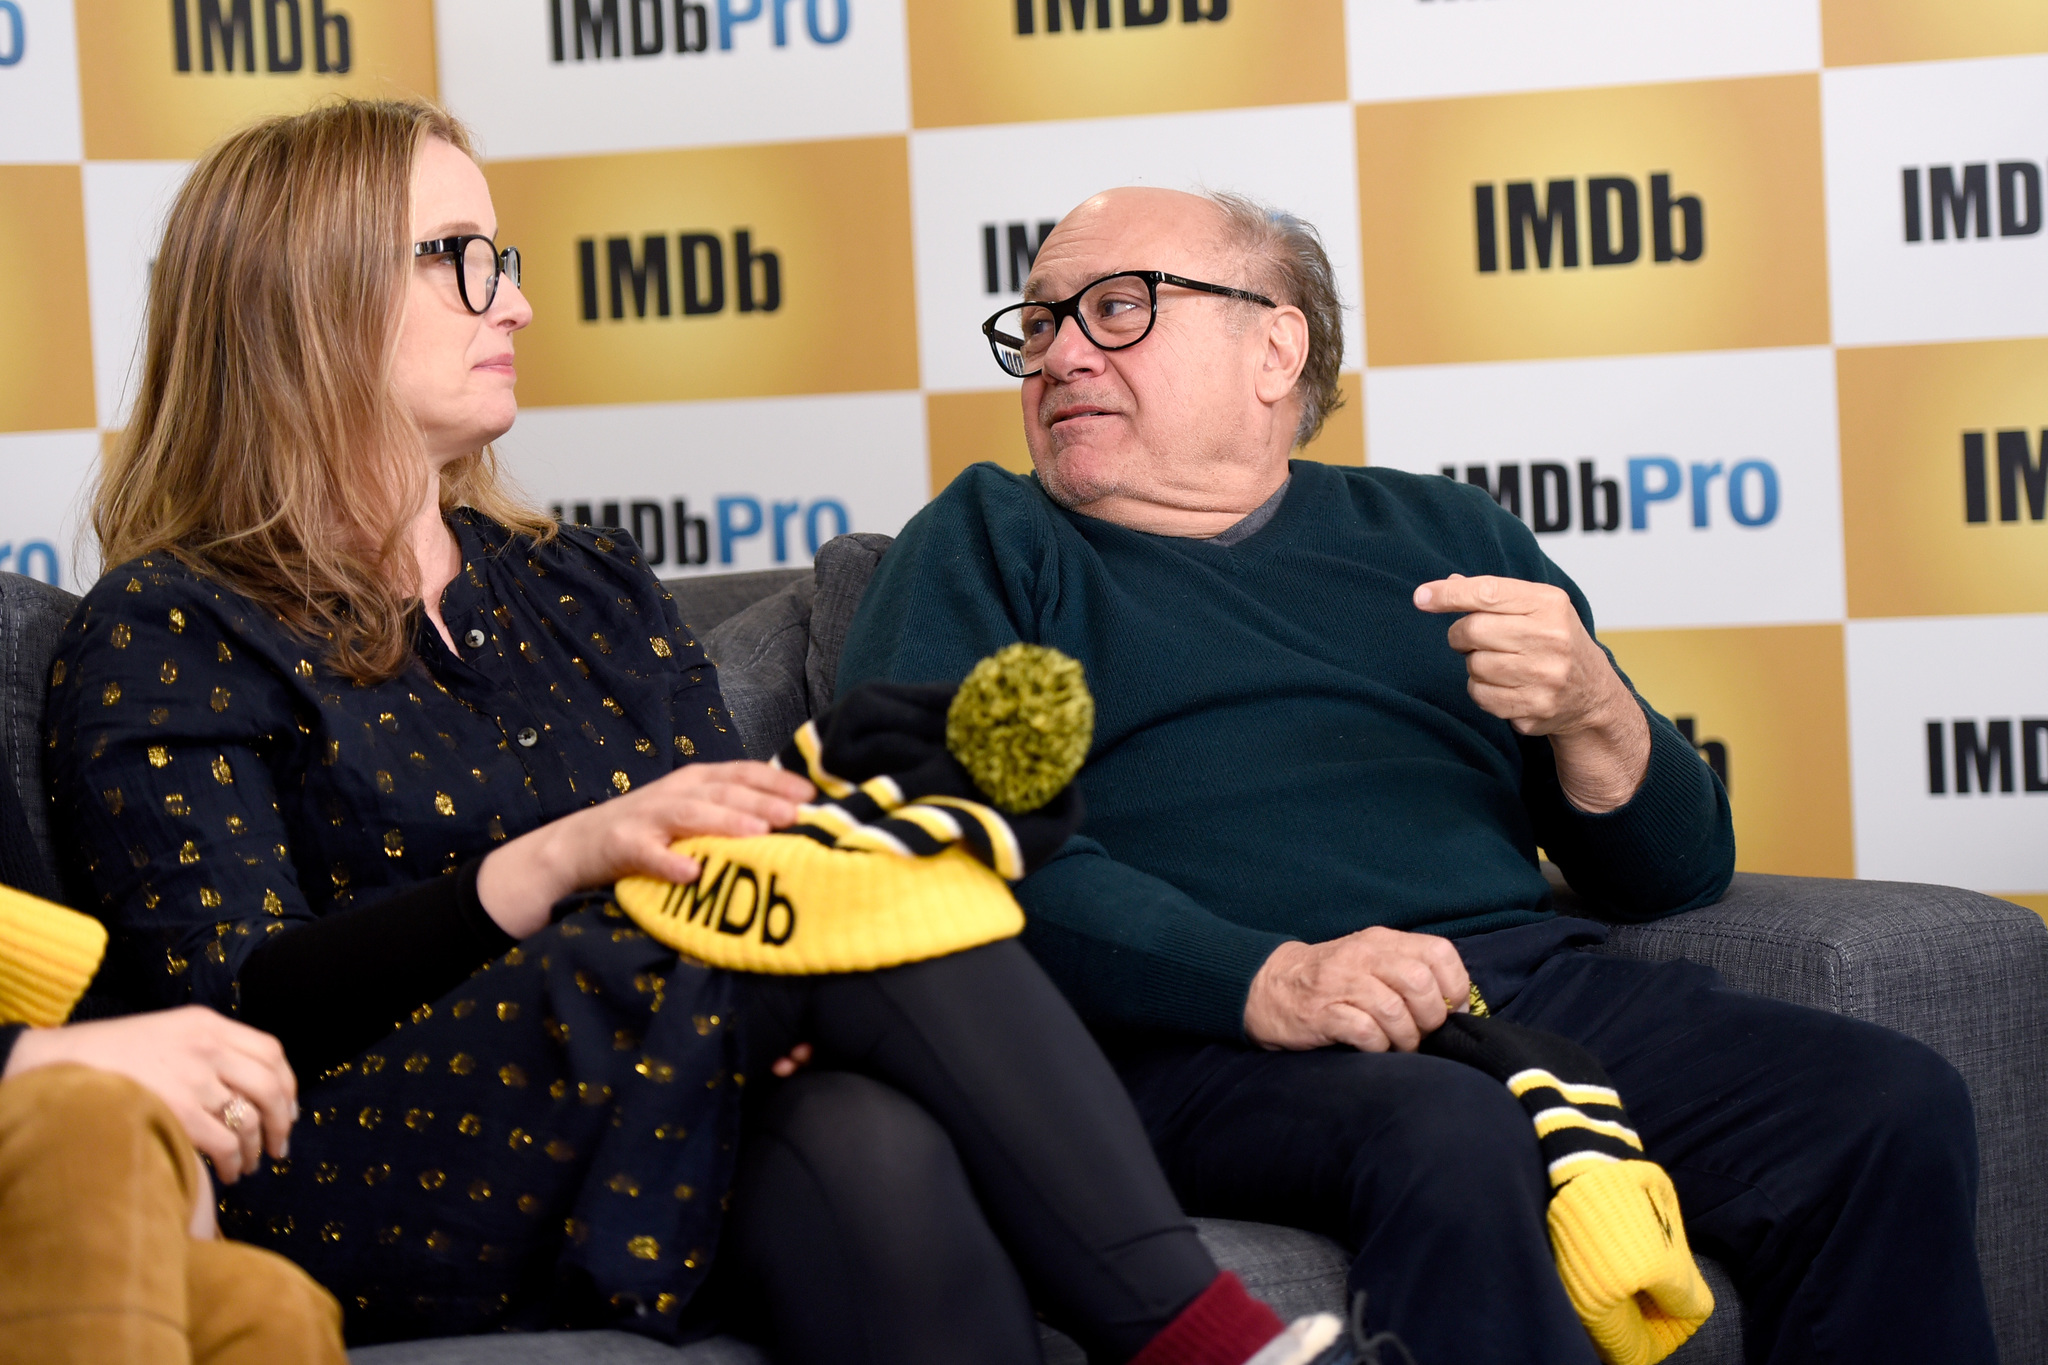 Danny DeVito and Julie Delpy at event of The IMDb Studio (2015)